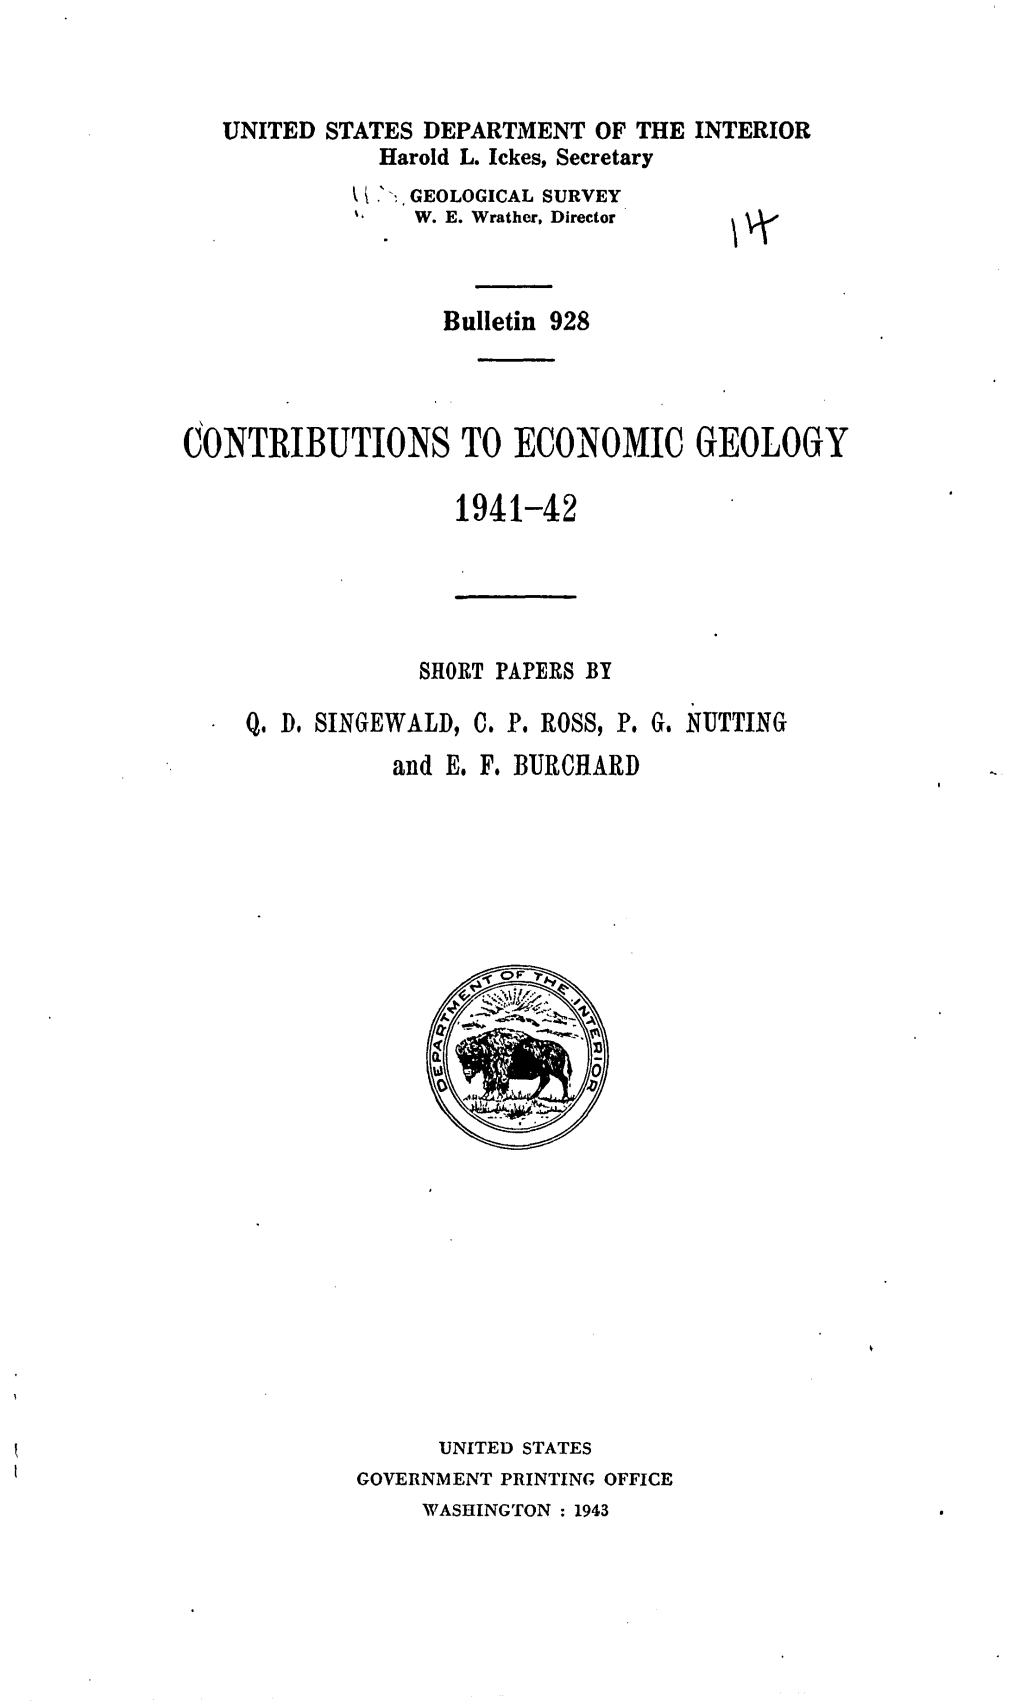 (Mtkibutions to Economic Geology 1941-42